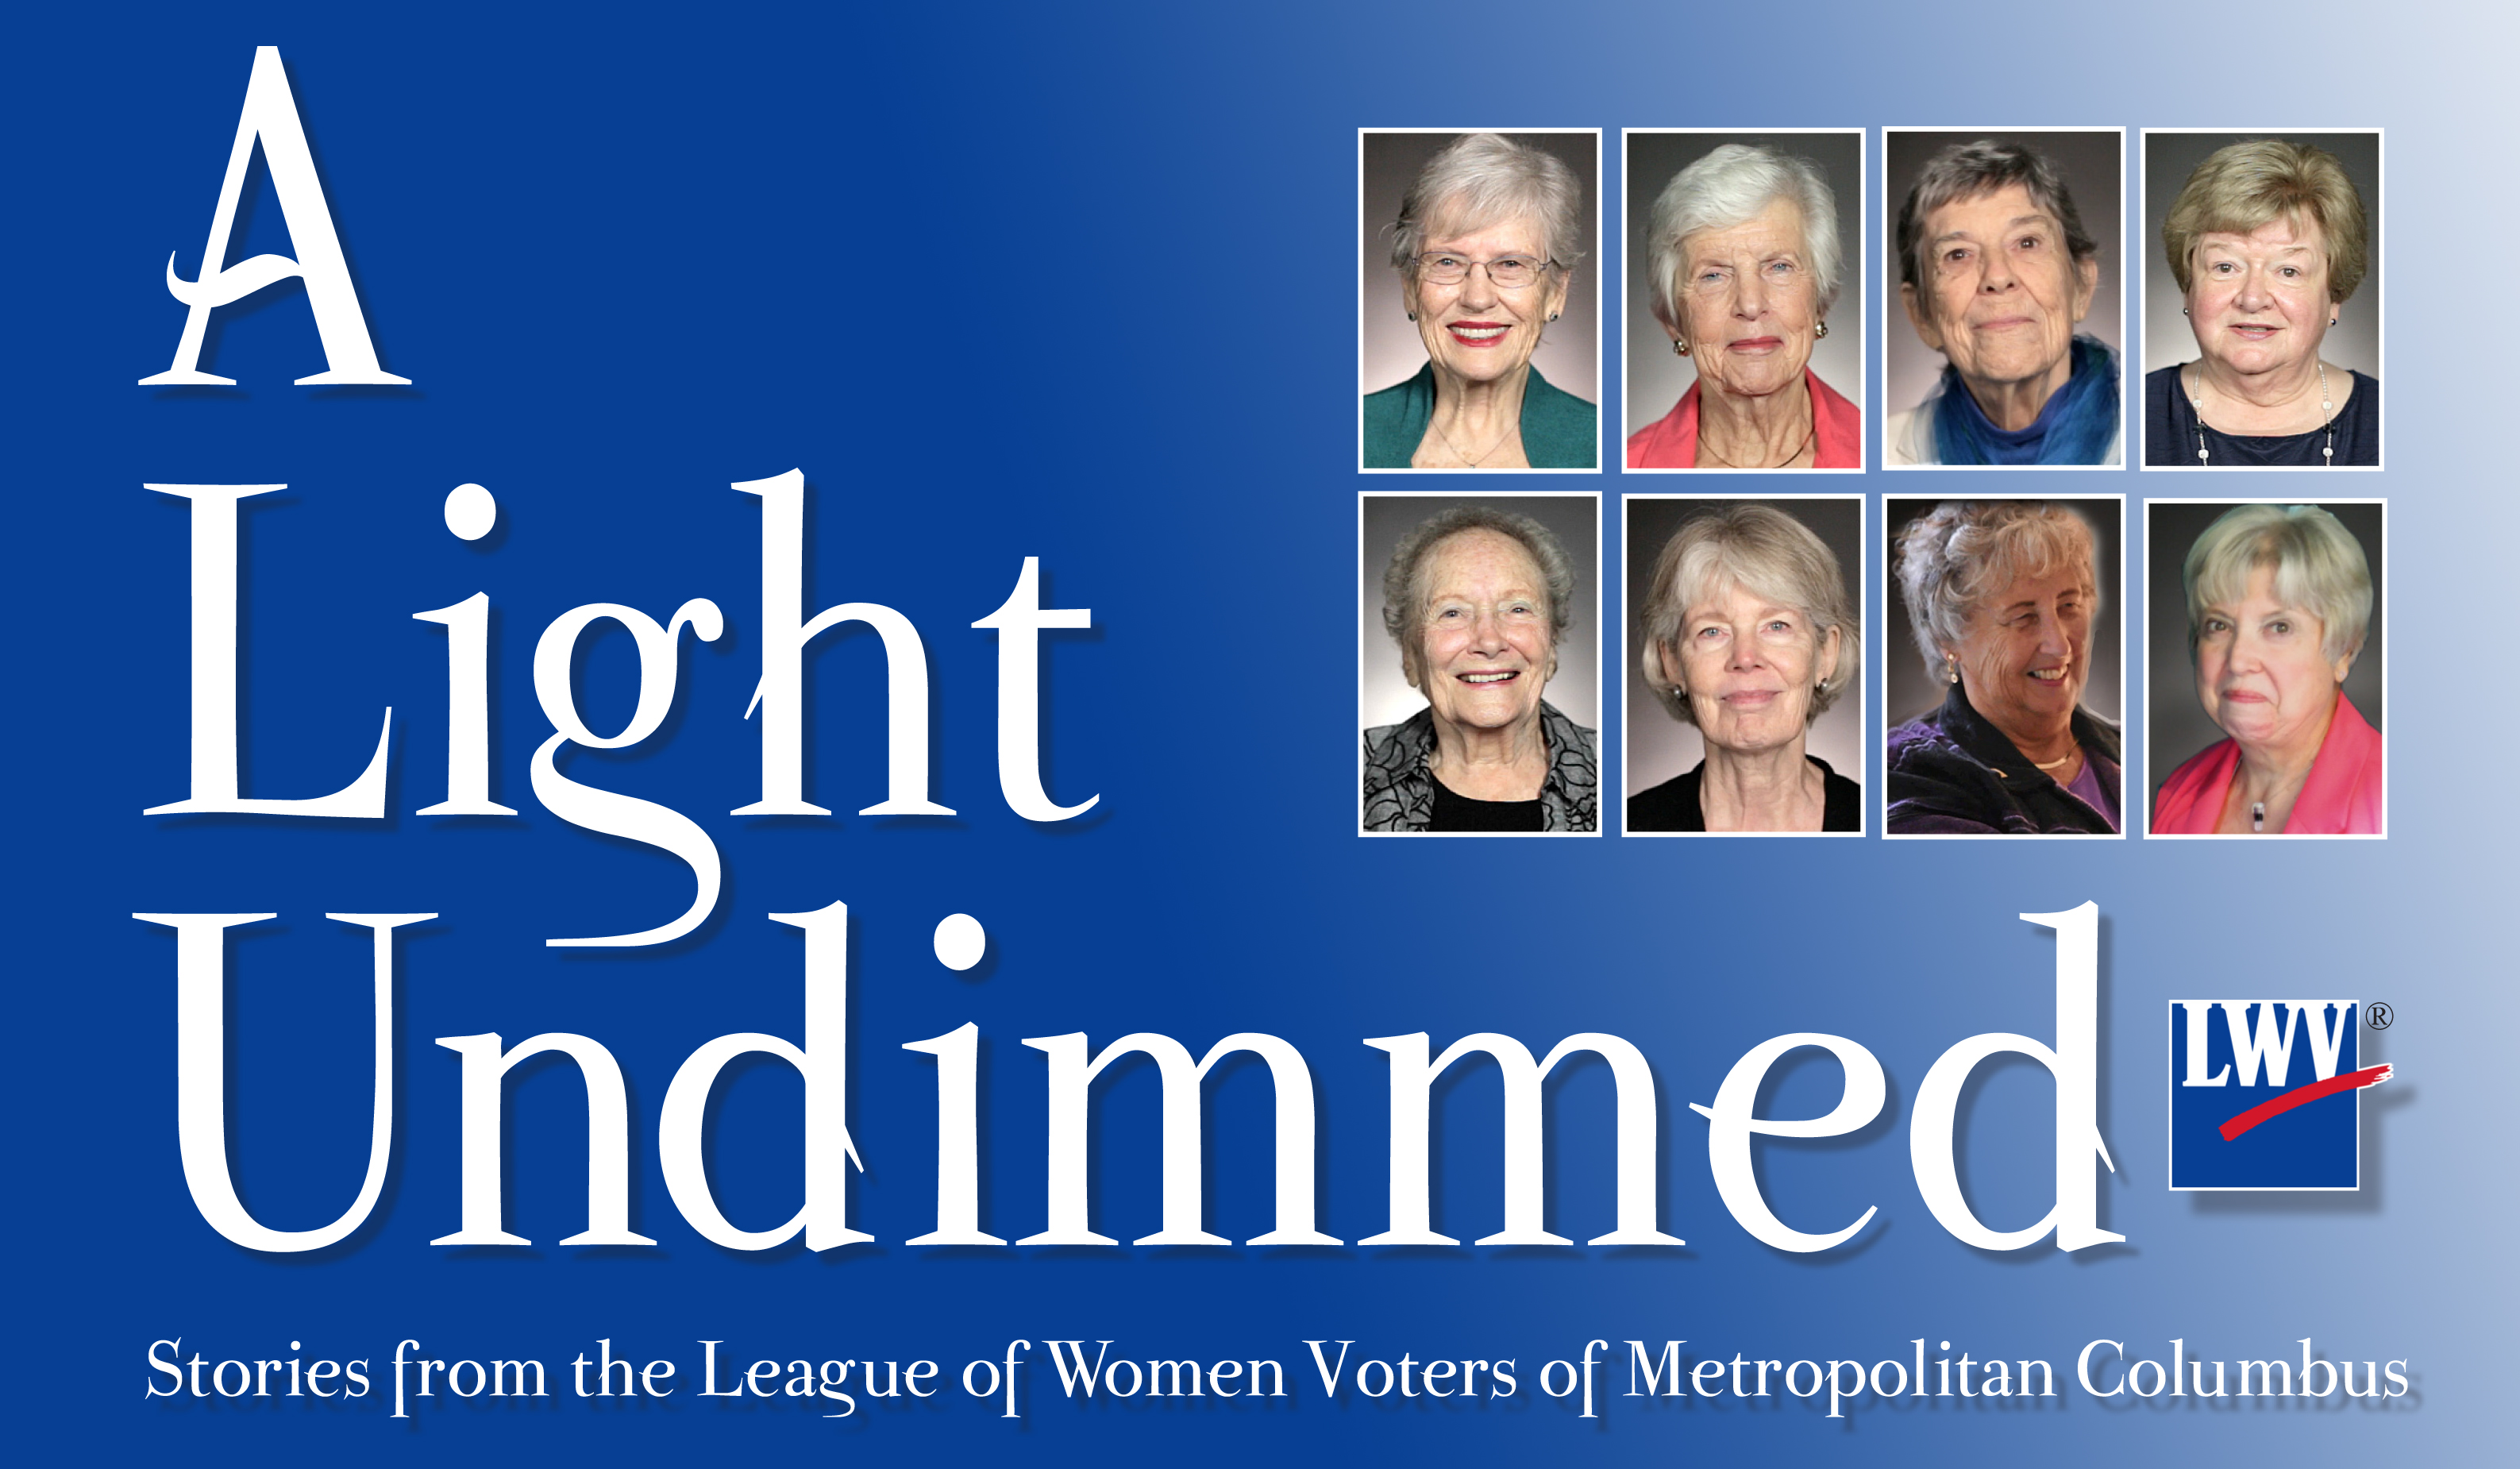 League of Women Voters of Metropolitan Columbus